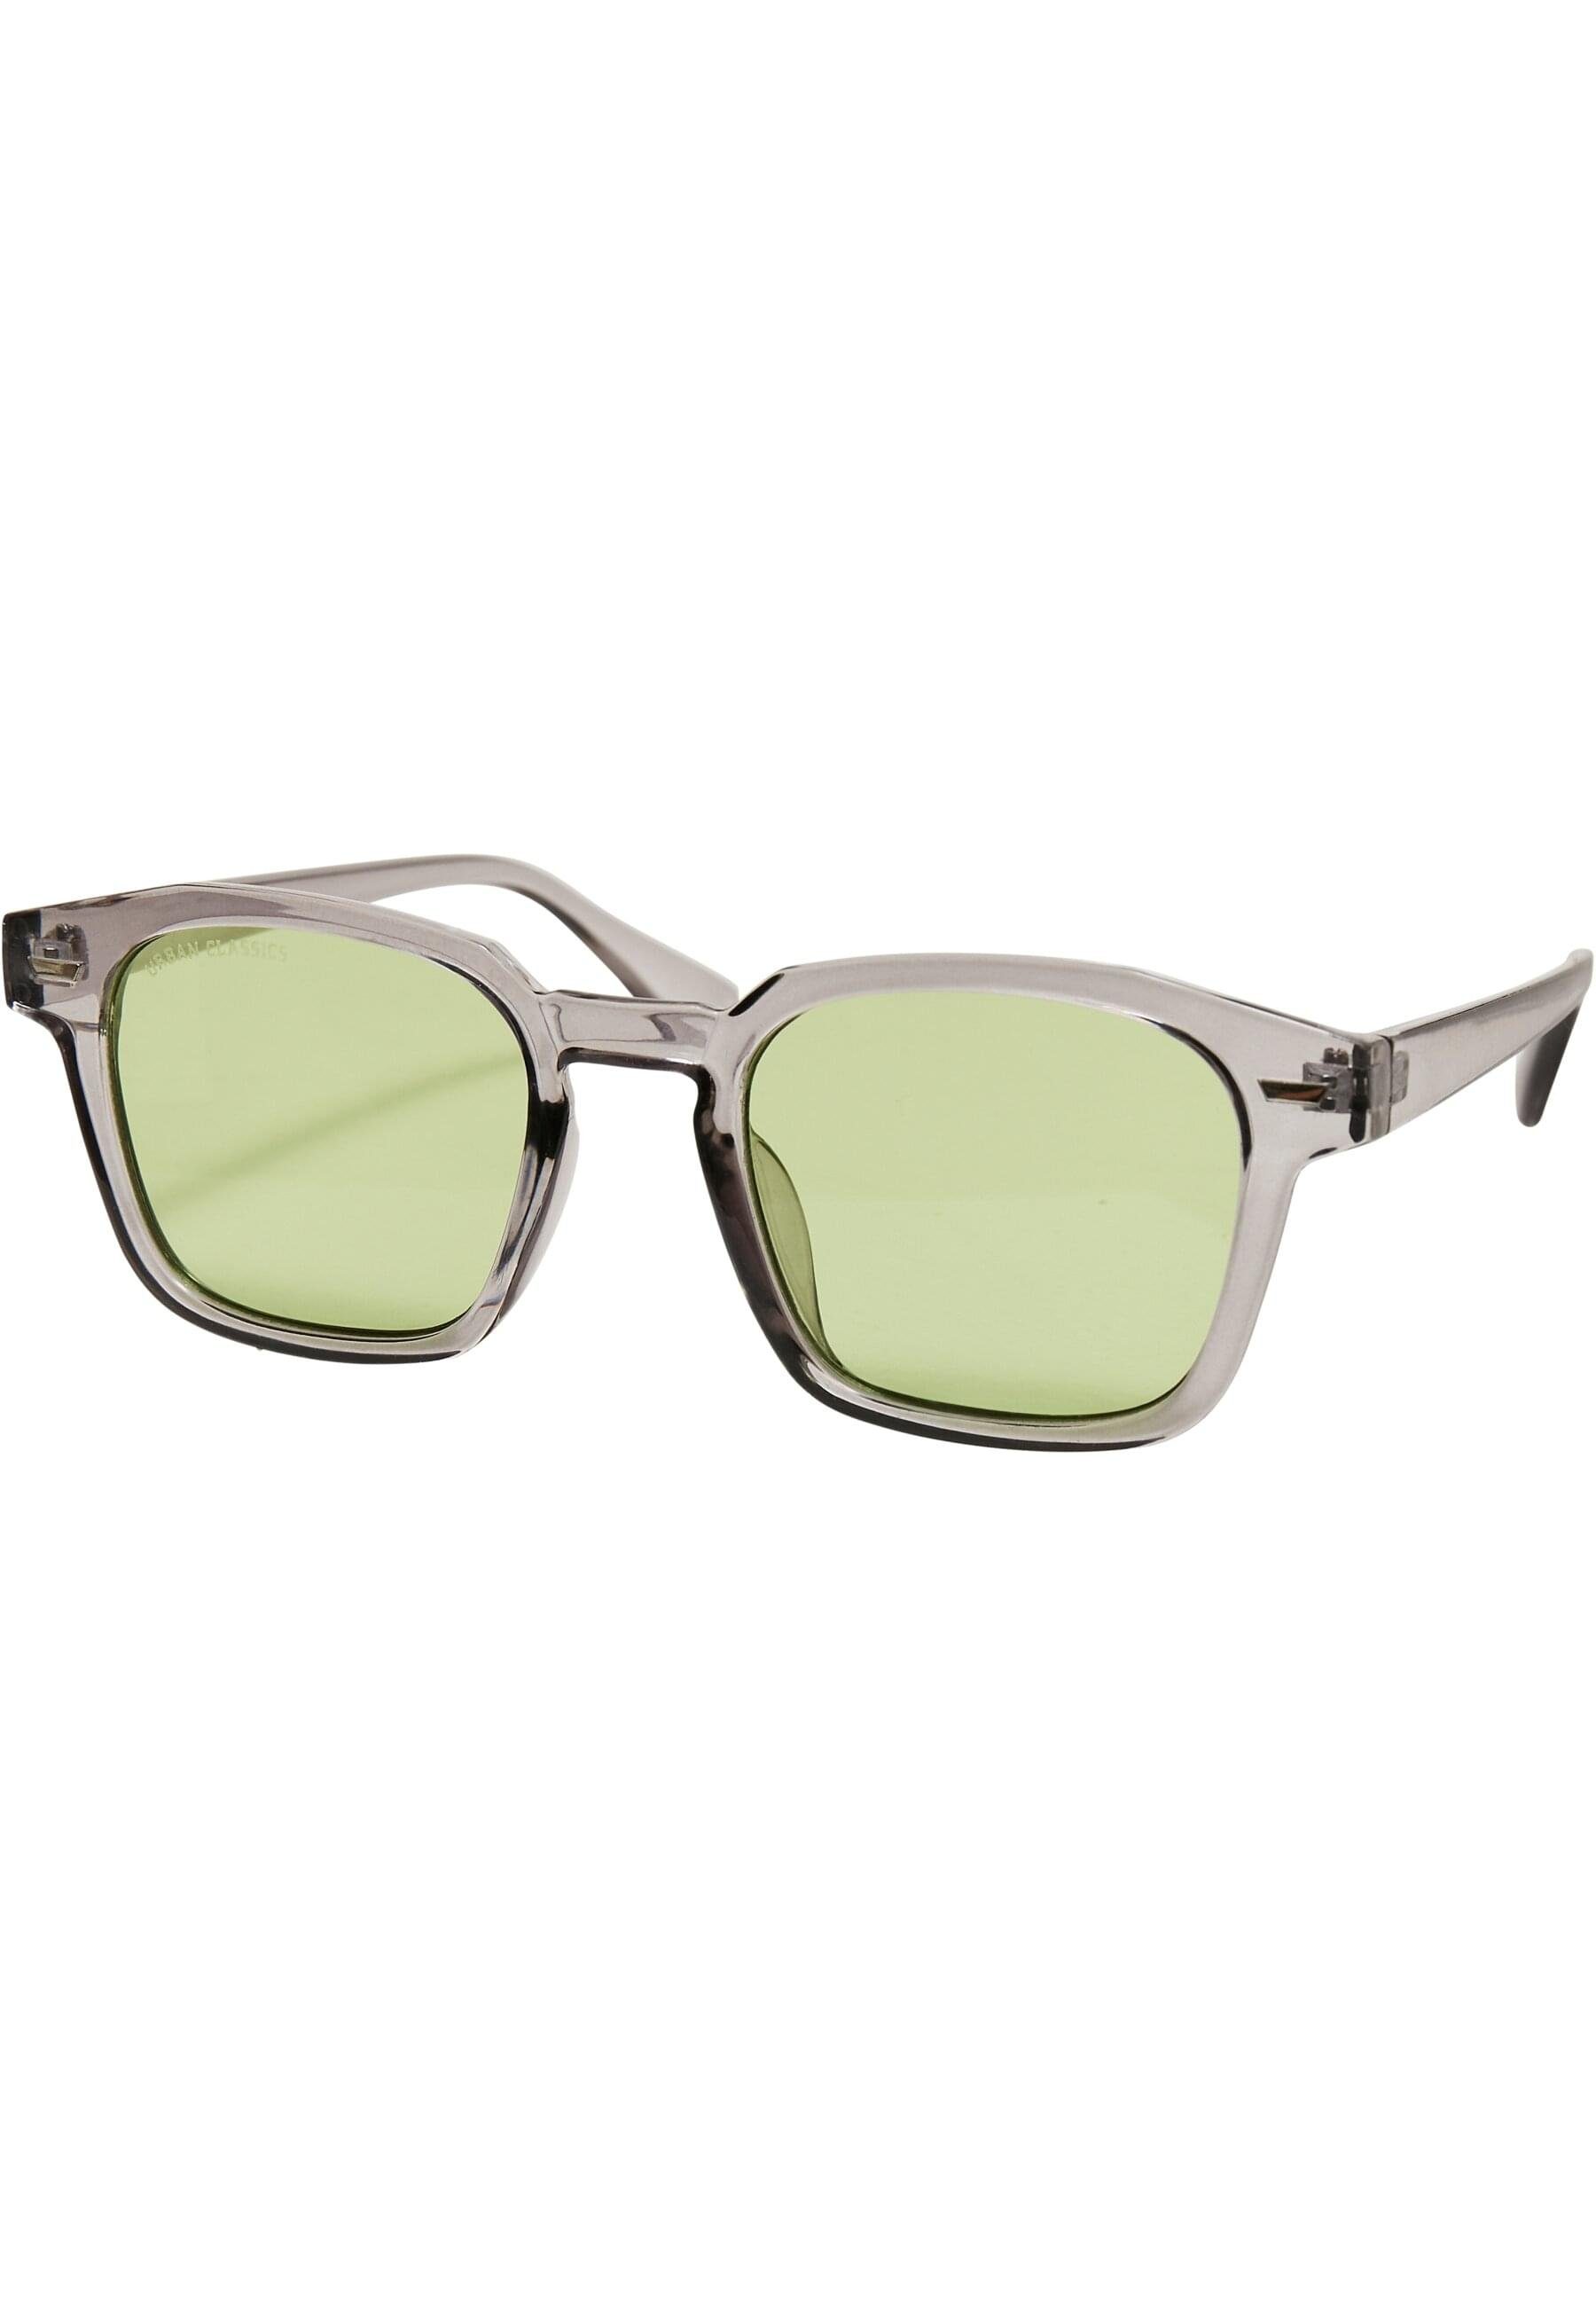 CLASSICS grey/yellow Maui Case Unisex With Sonnenbrille Sunglasses URBAN